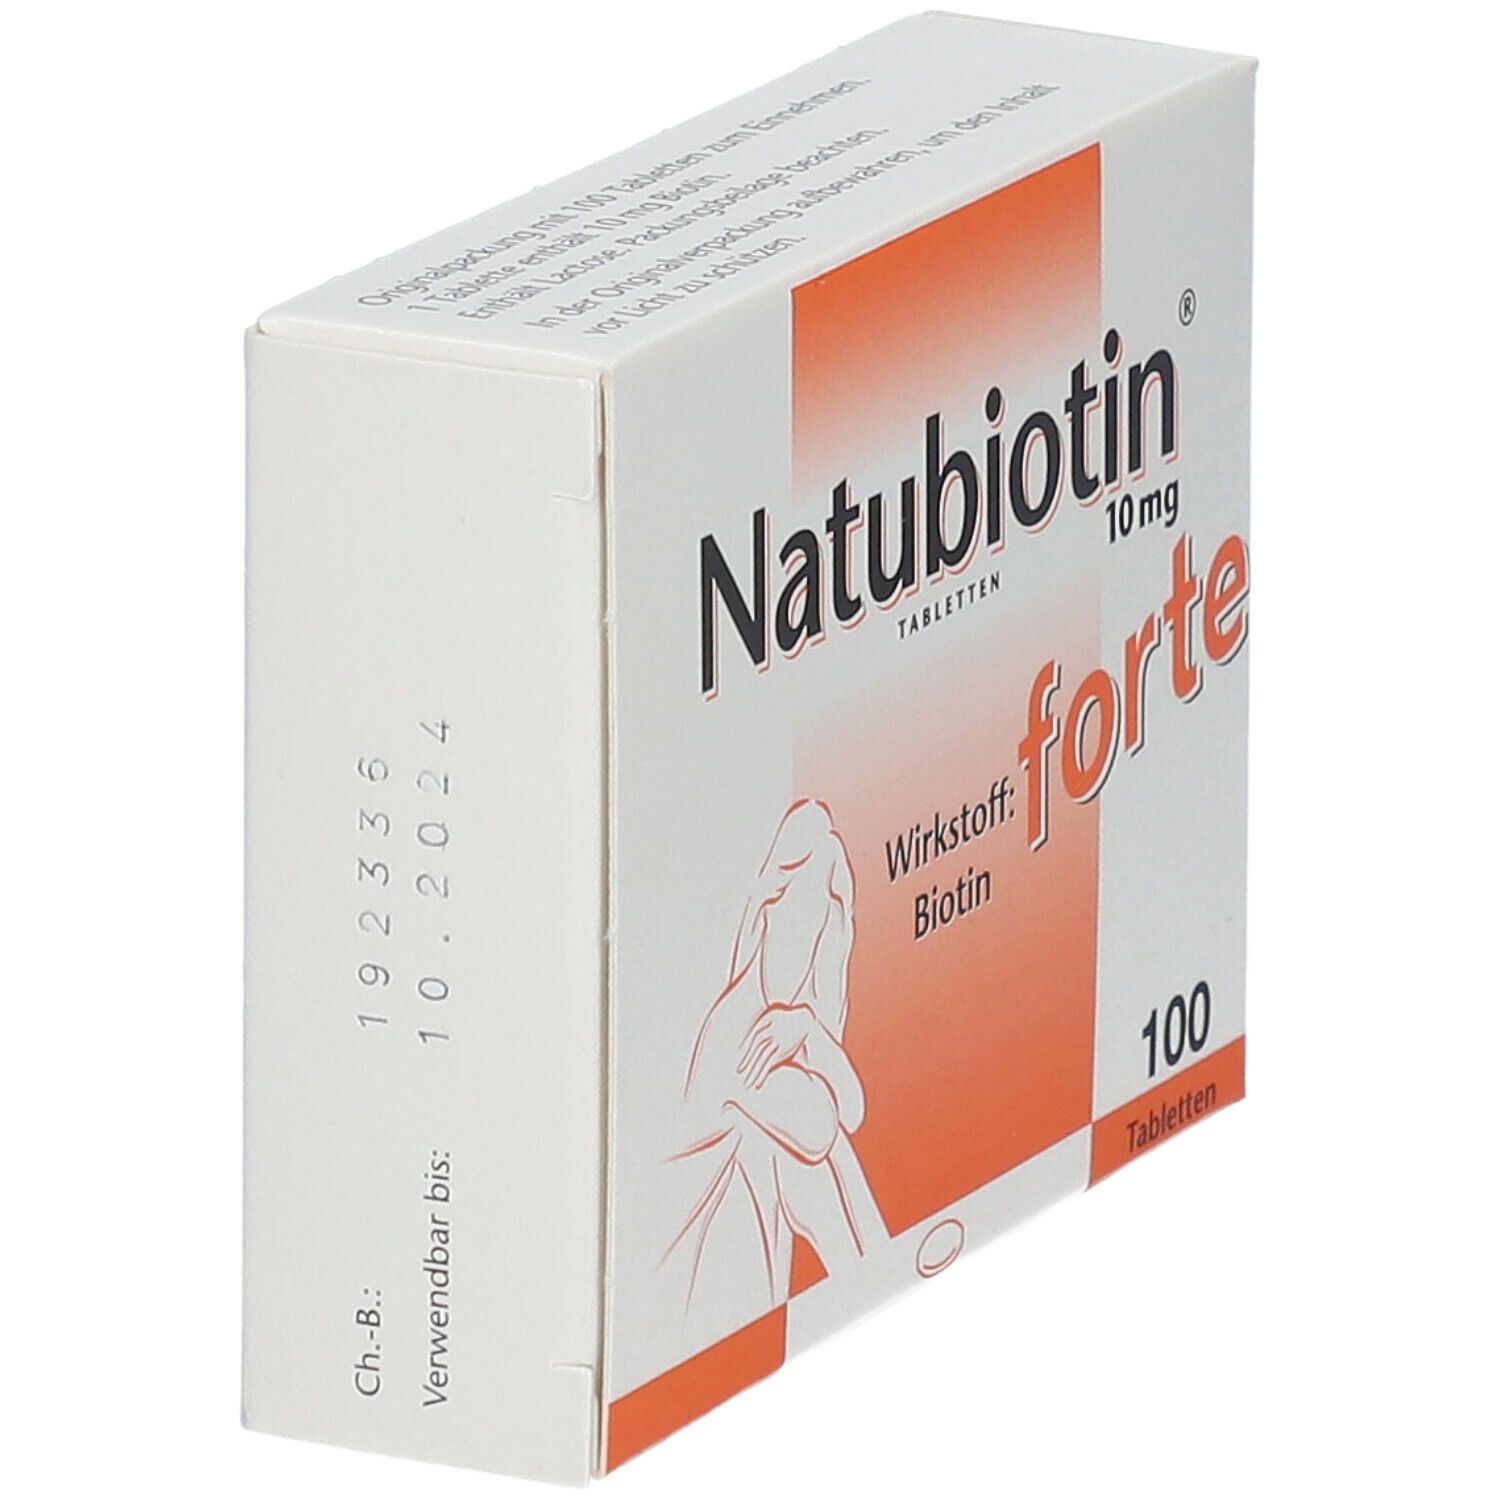 Natubiotin® 10 mg forte